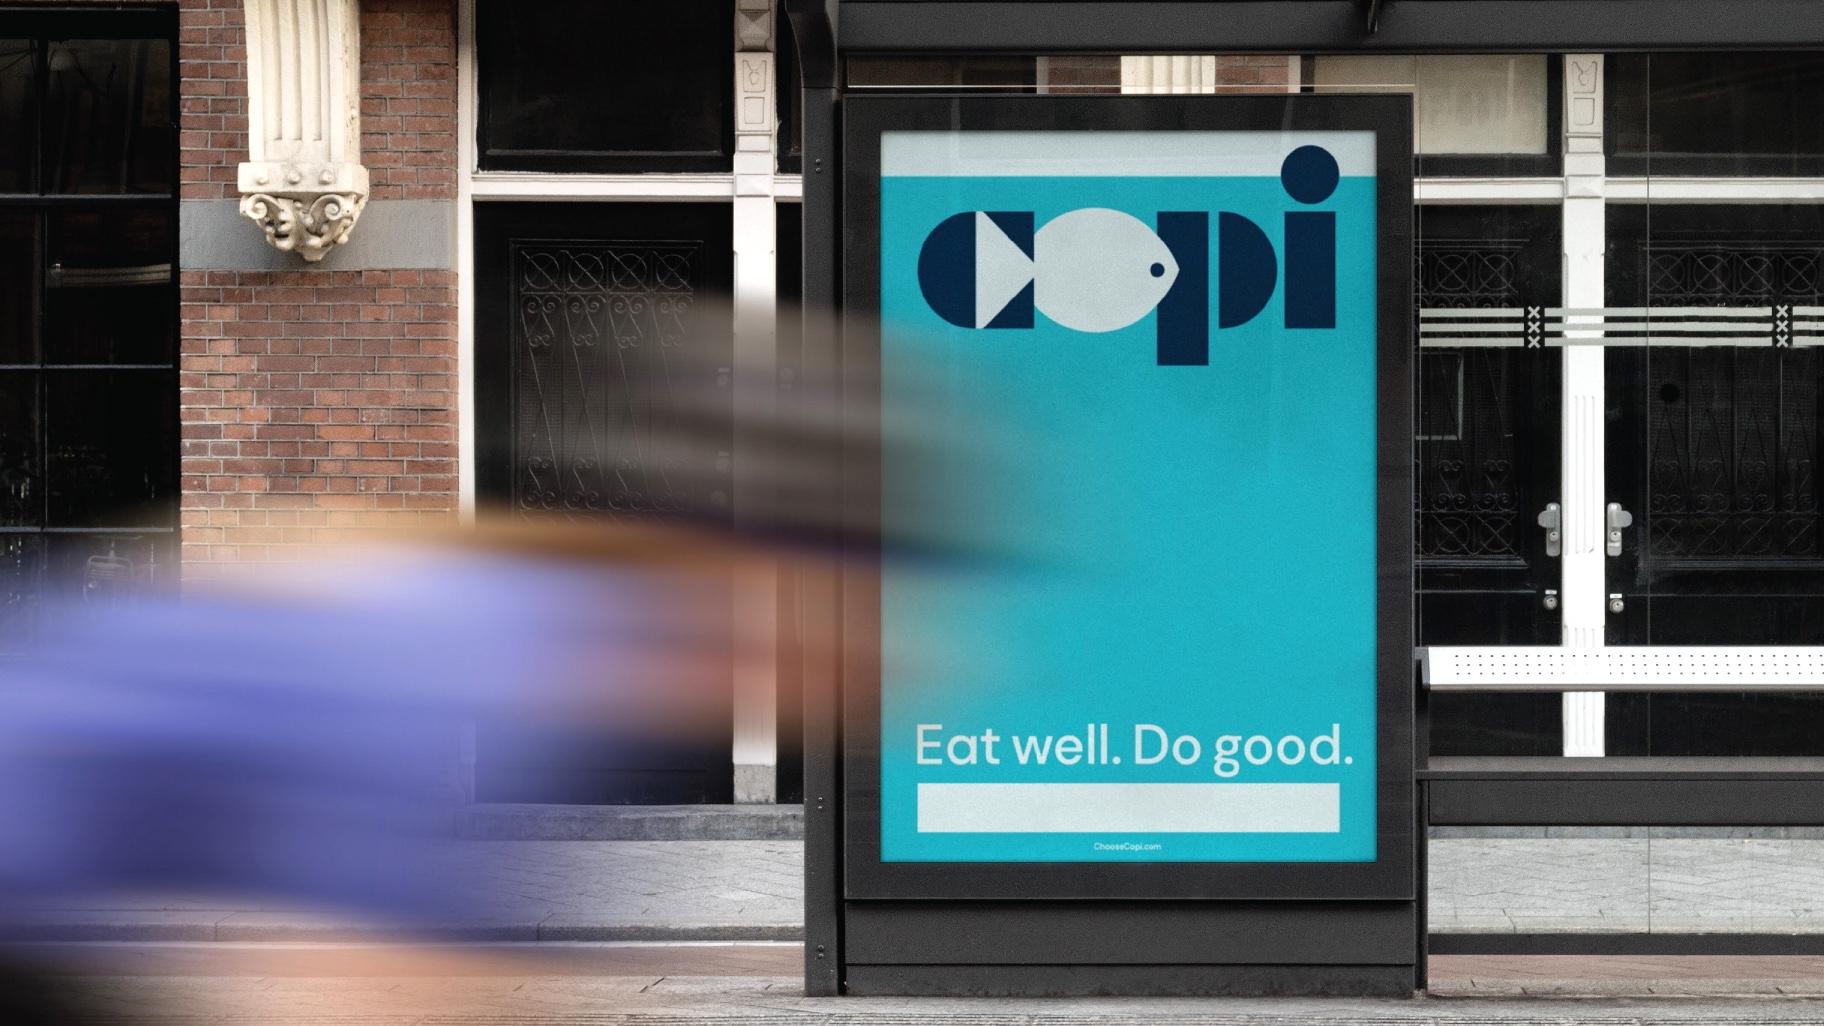 The copi logo and marketing campaign. (Span Studio)